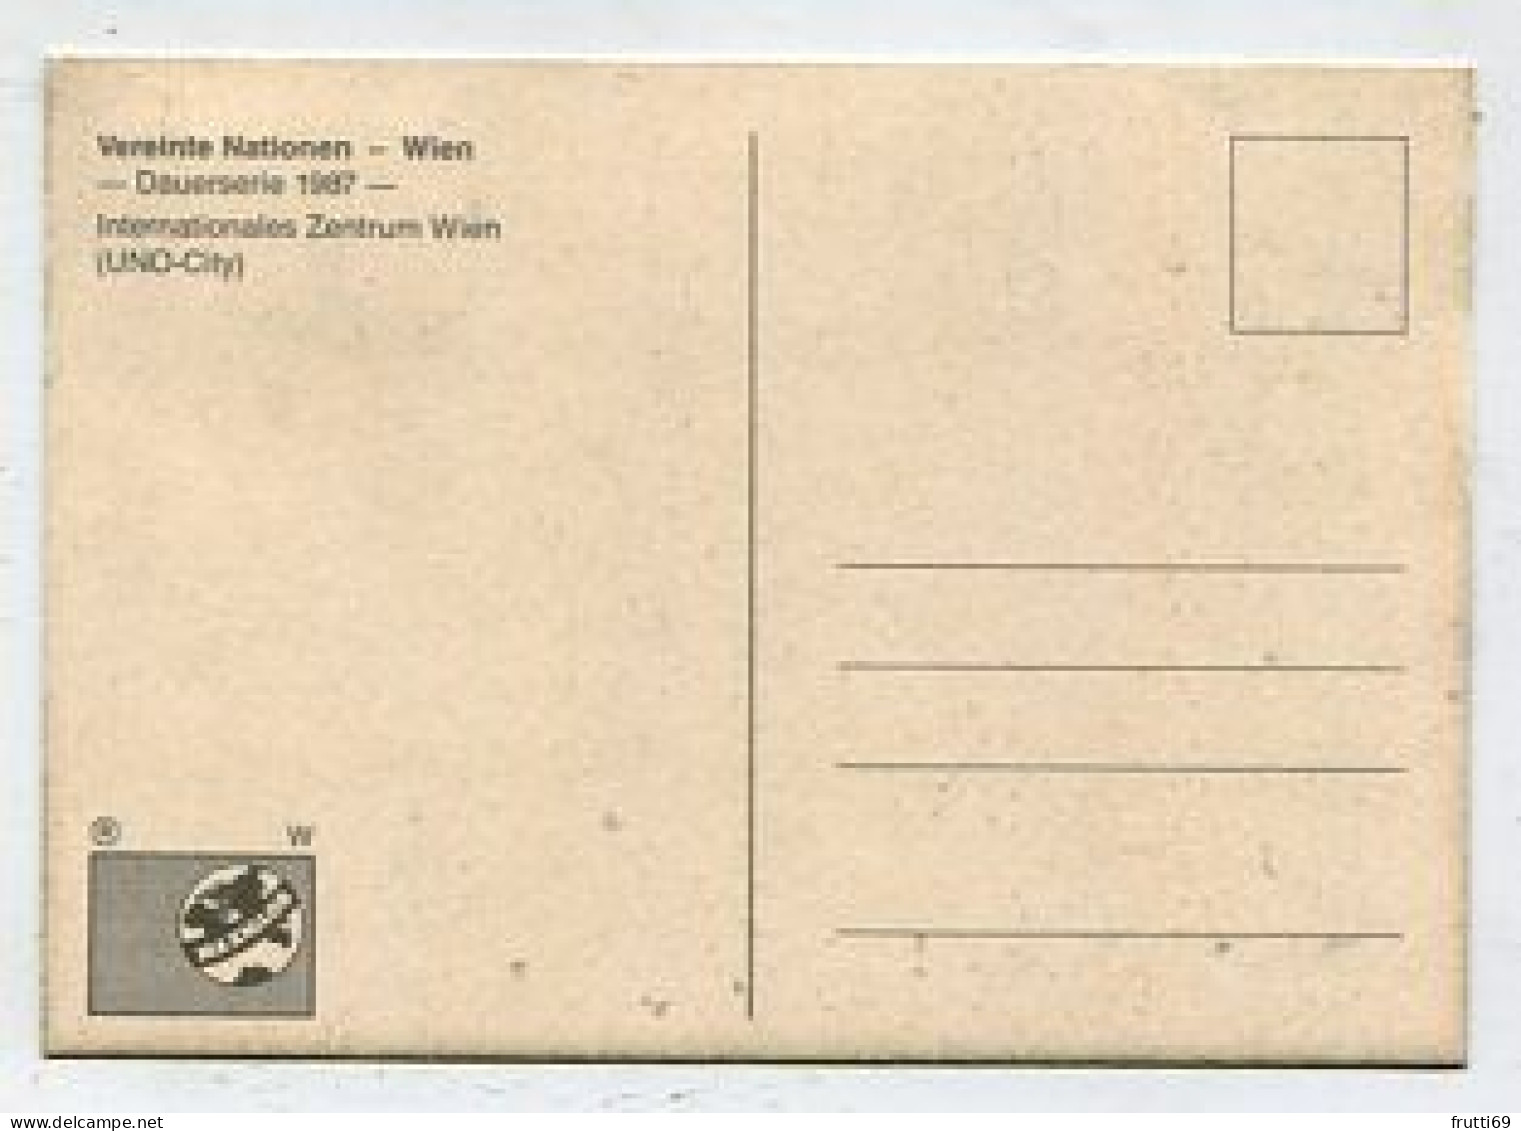 MC 158465 UNITED NATIONS - Wien - 1987  Dauerserie 1987 - Internationales Zentrum Wien - Maximum Cards